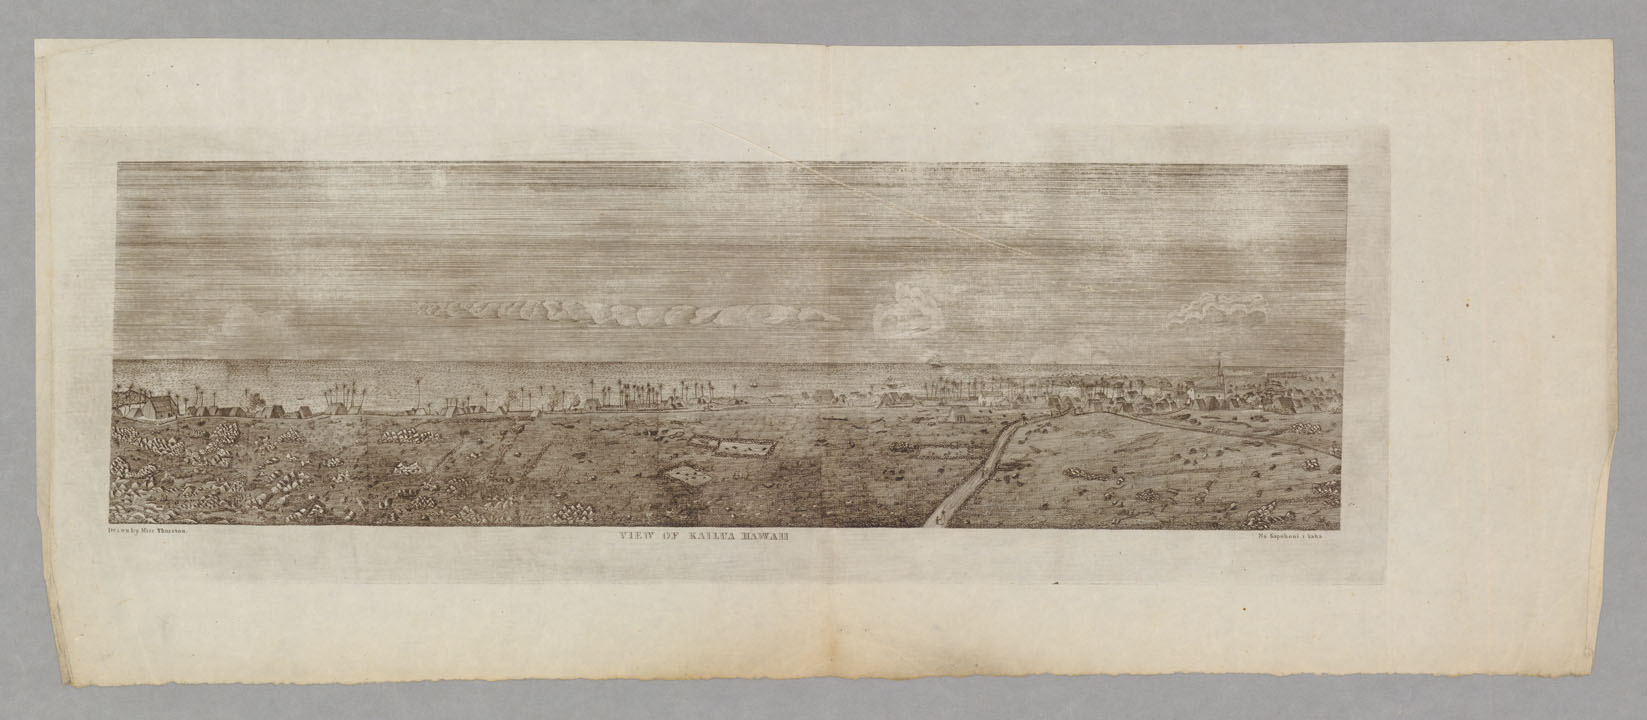 View of Kailua, Hawaii, 1836